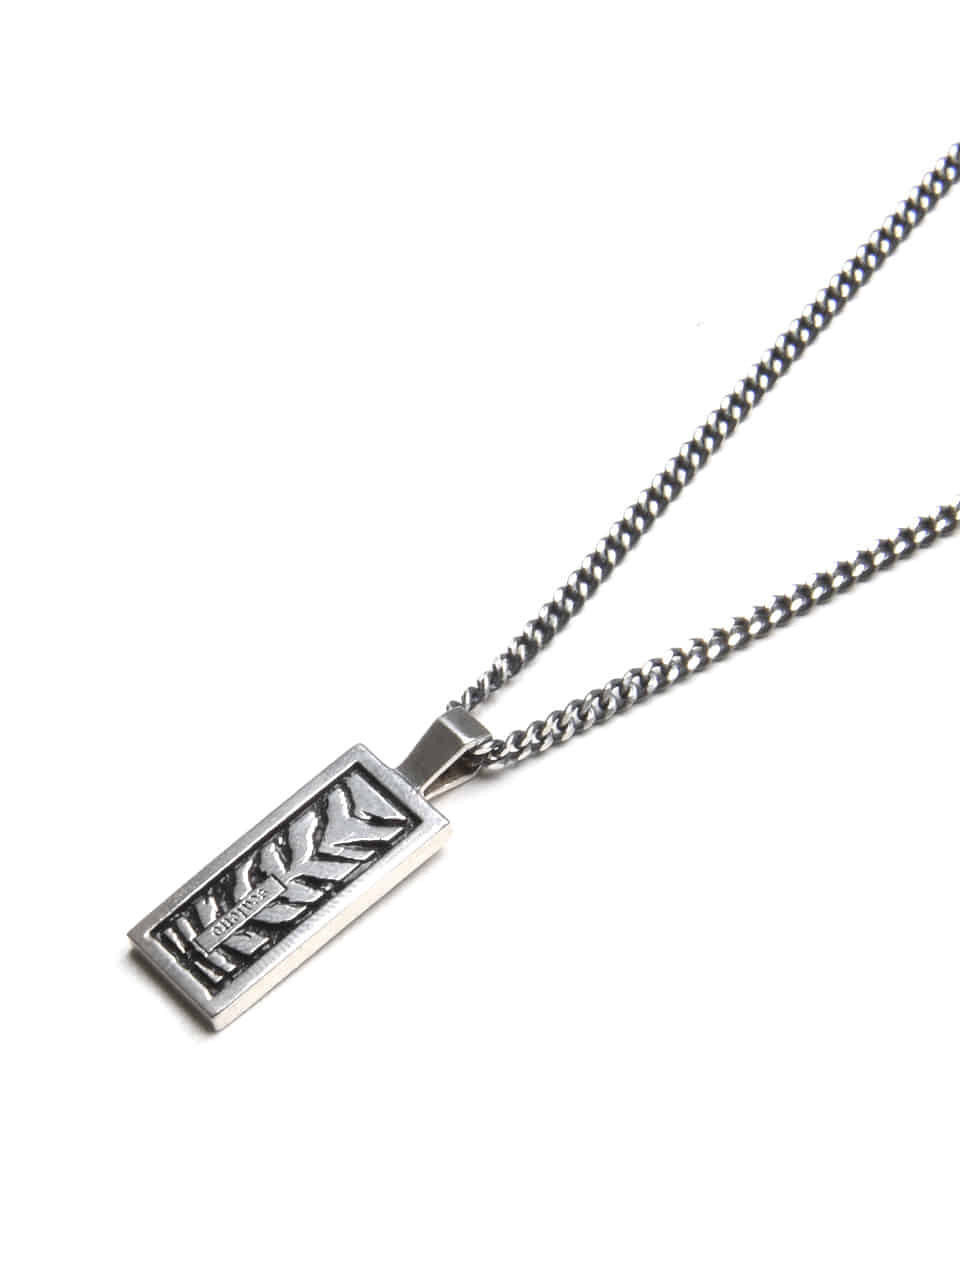 BA010 [Silver925] Tiger pattern necklace